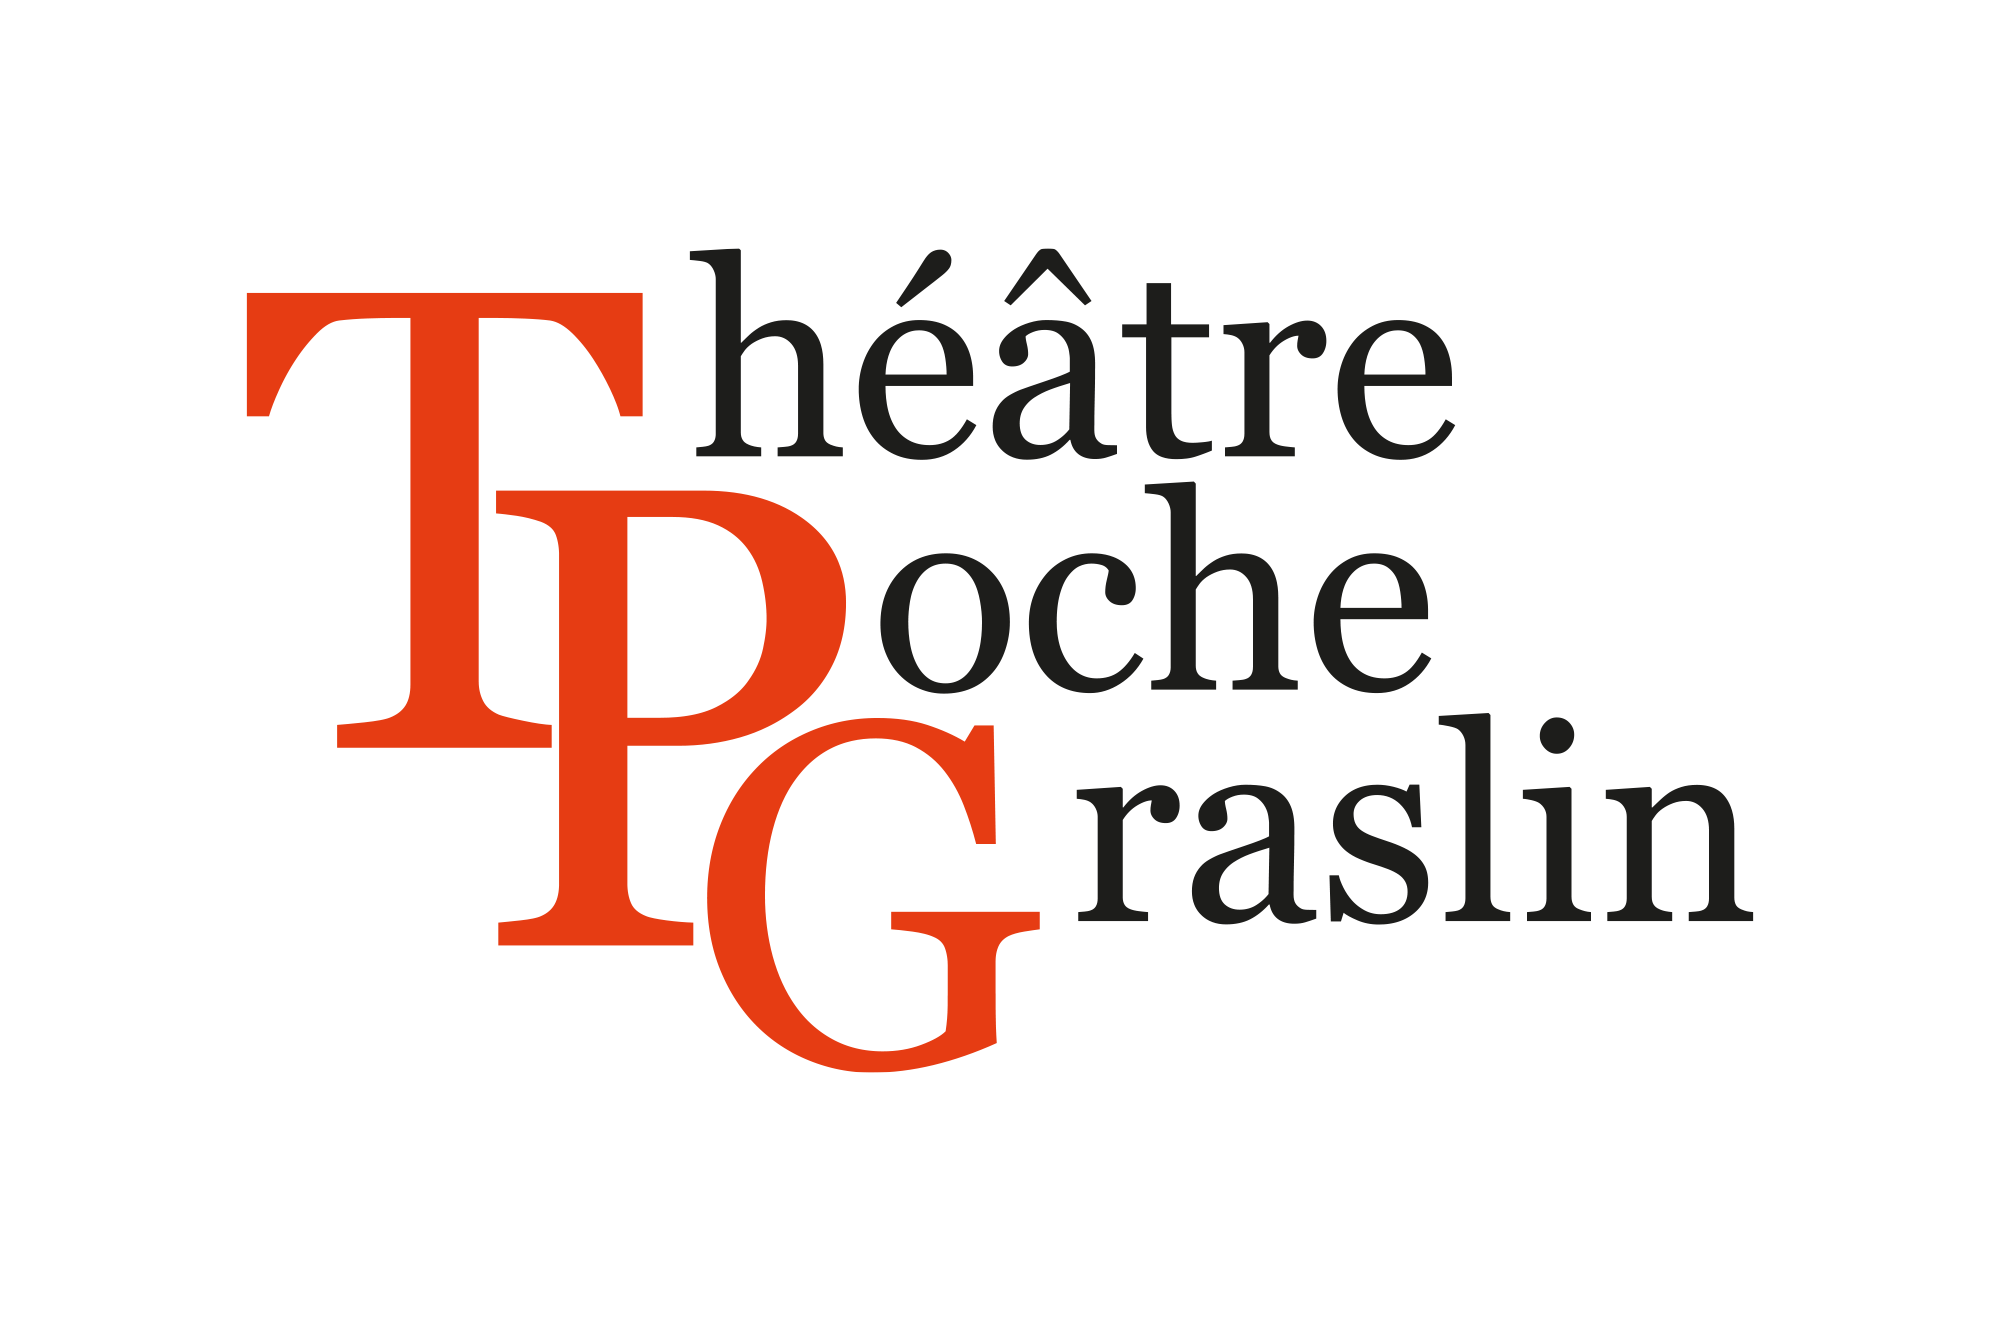 Théâtre de Poche Graslin (TPG)